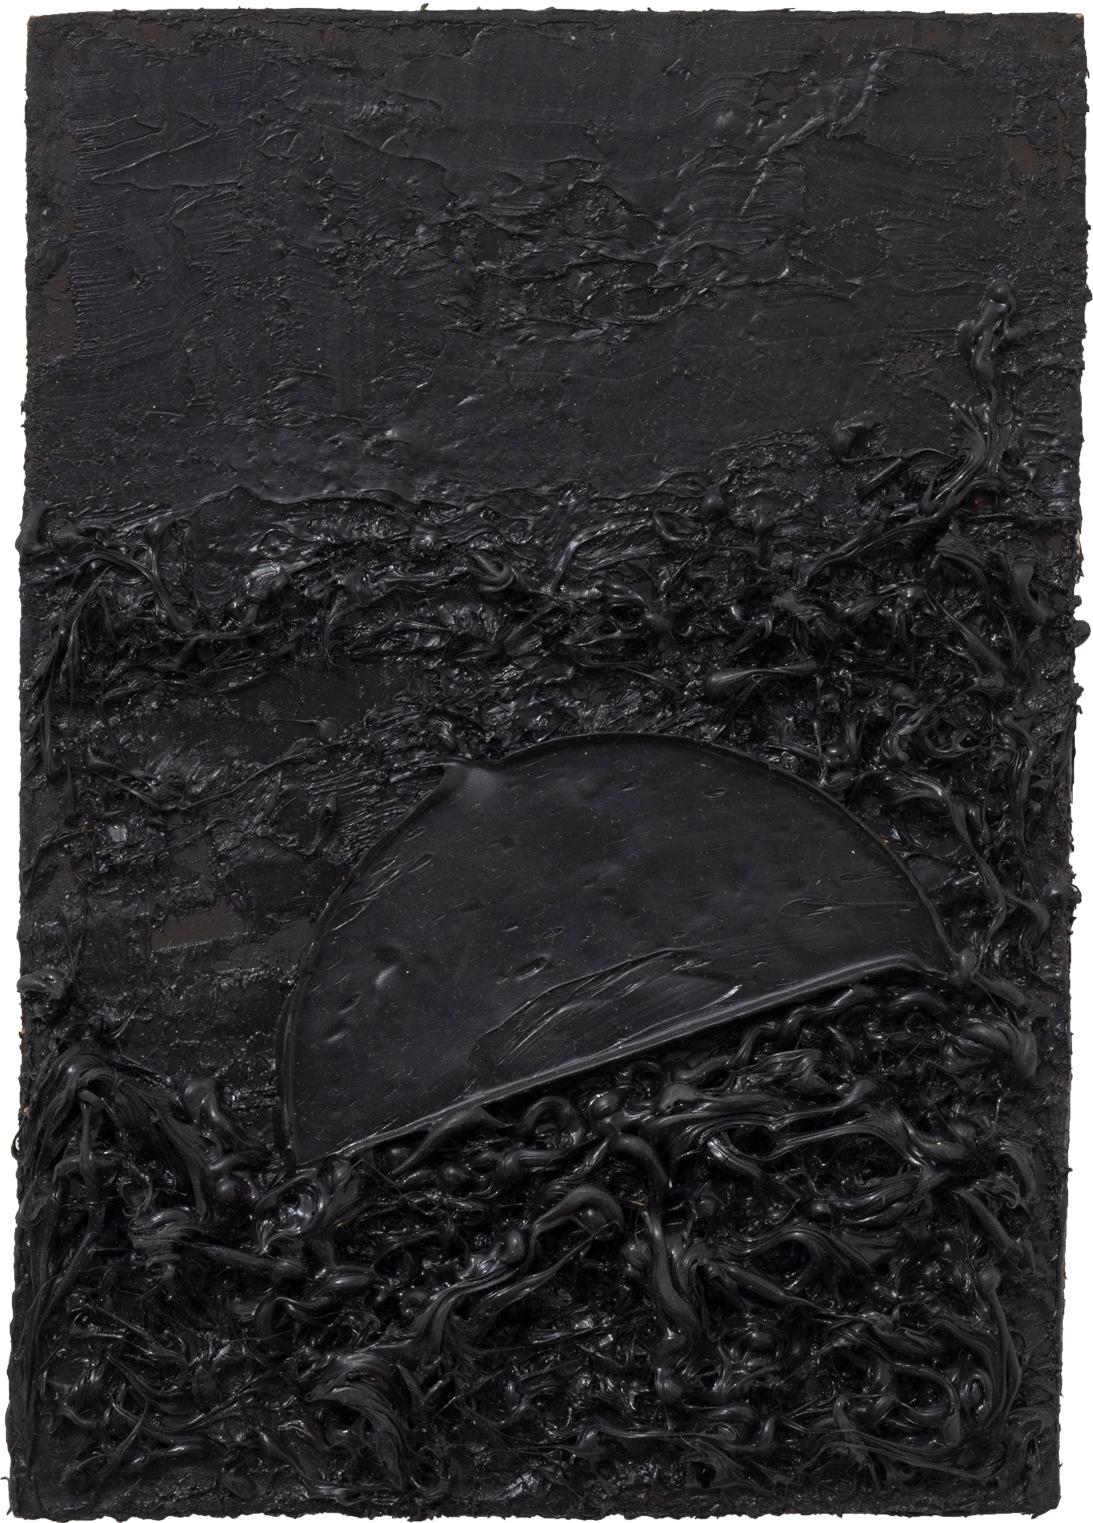 Untitled 06 - Contemporary, Abstract, Black, Organic, Monochrome - Mixed Media Art by Zsolt Berszán